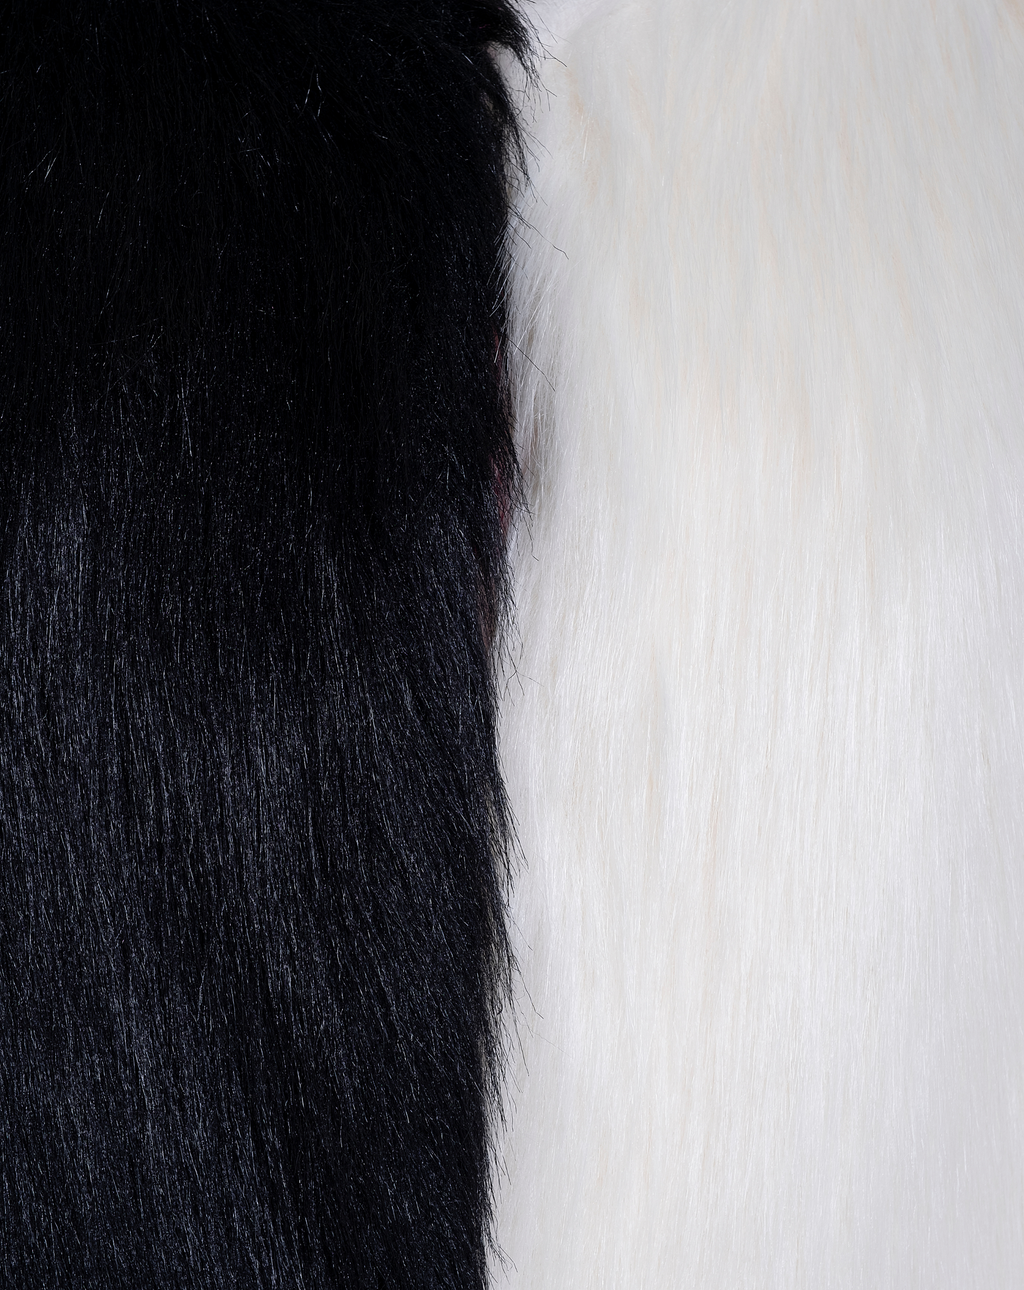 DRAMA POP - Pelliccia in faux fur bianco e nero